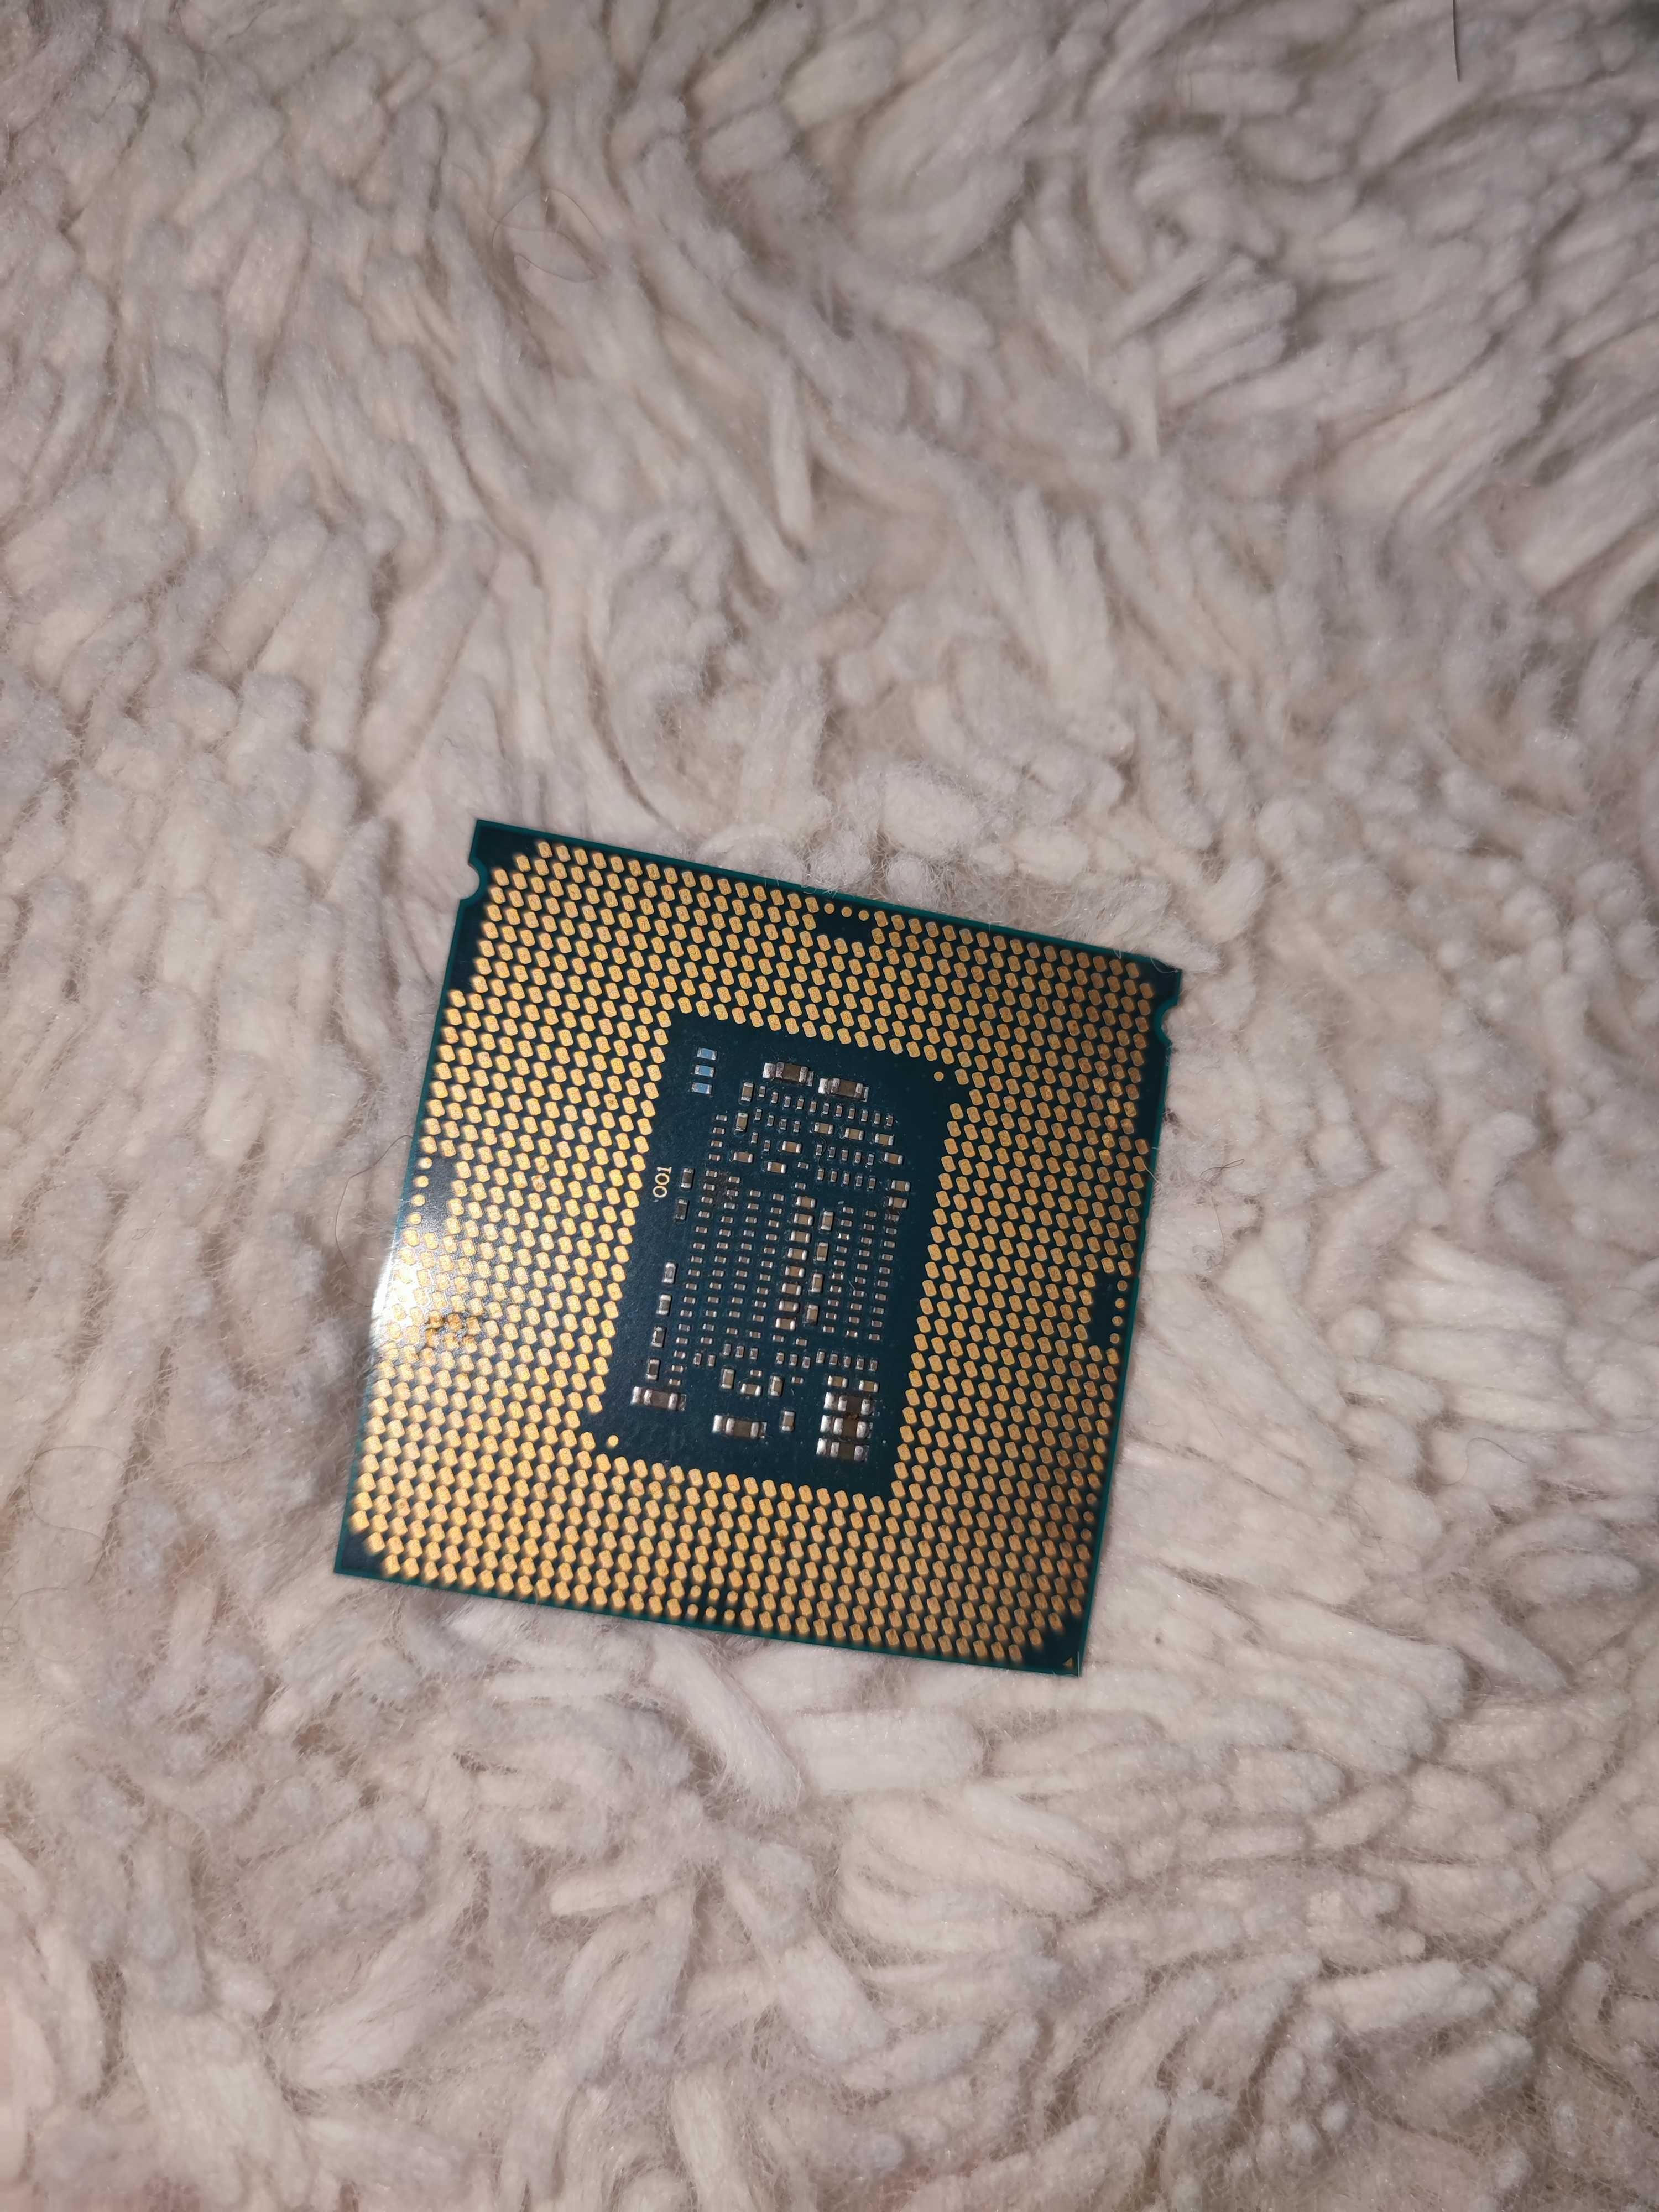 Procesor Intel core i3